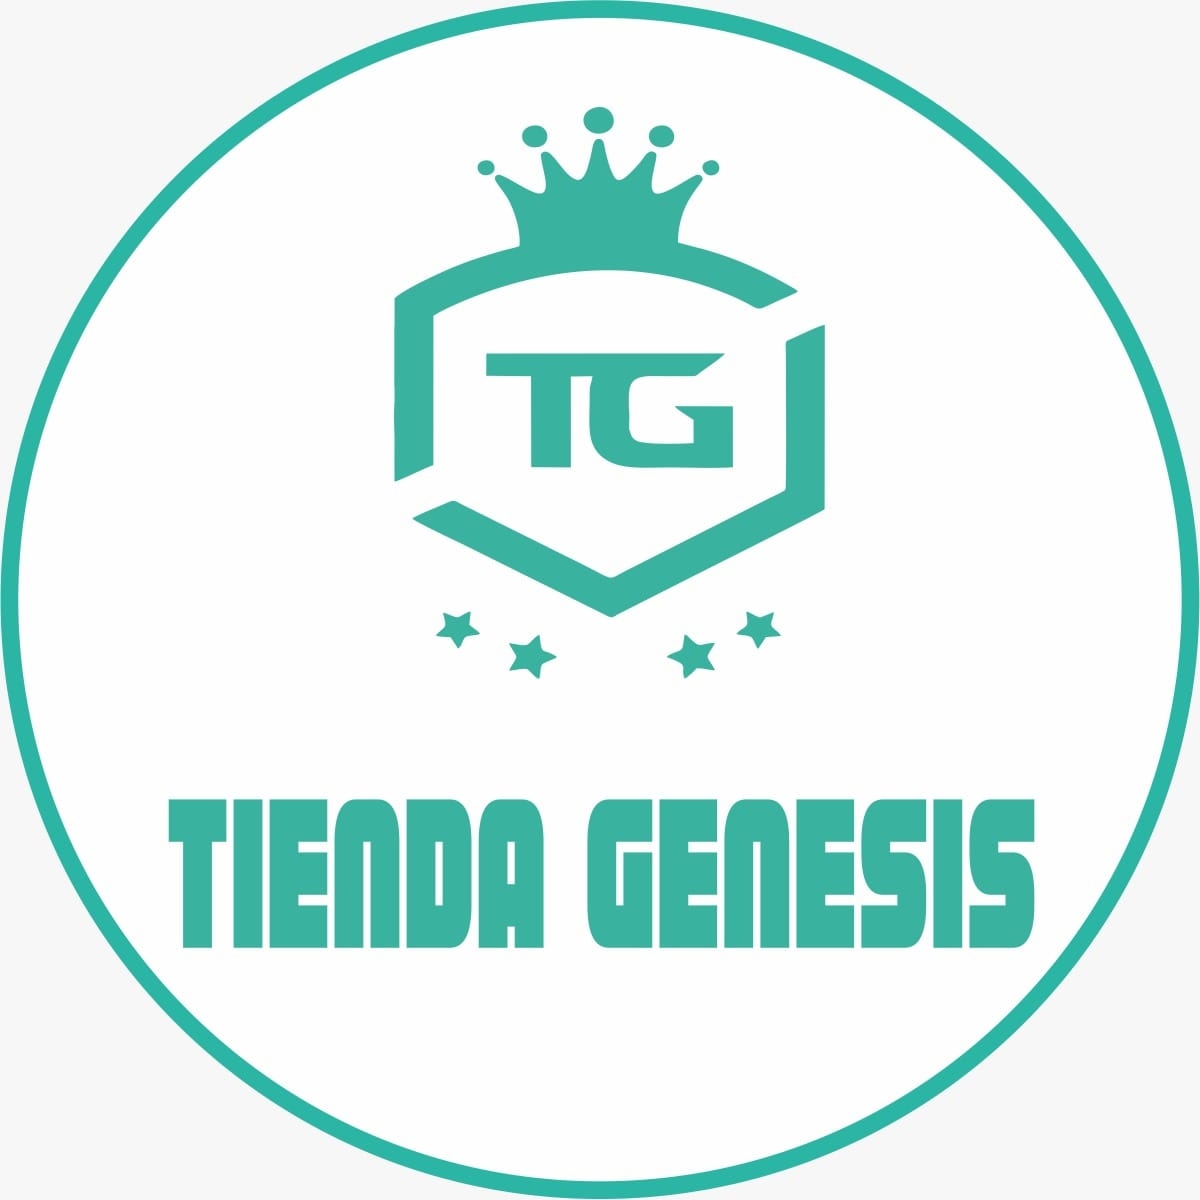 Tienda Genesis